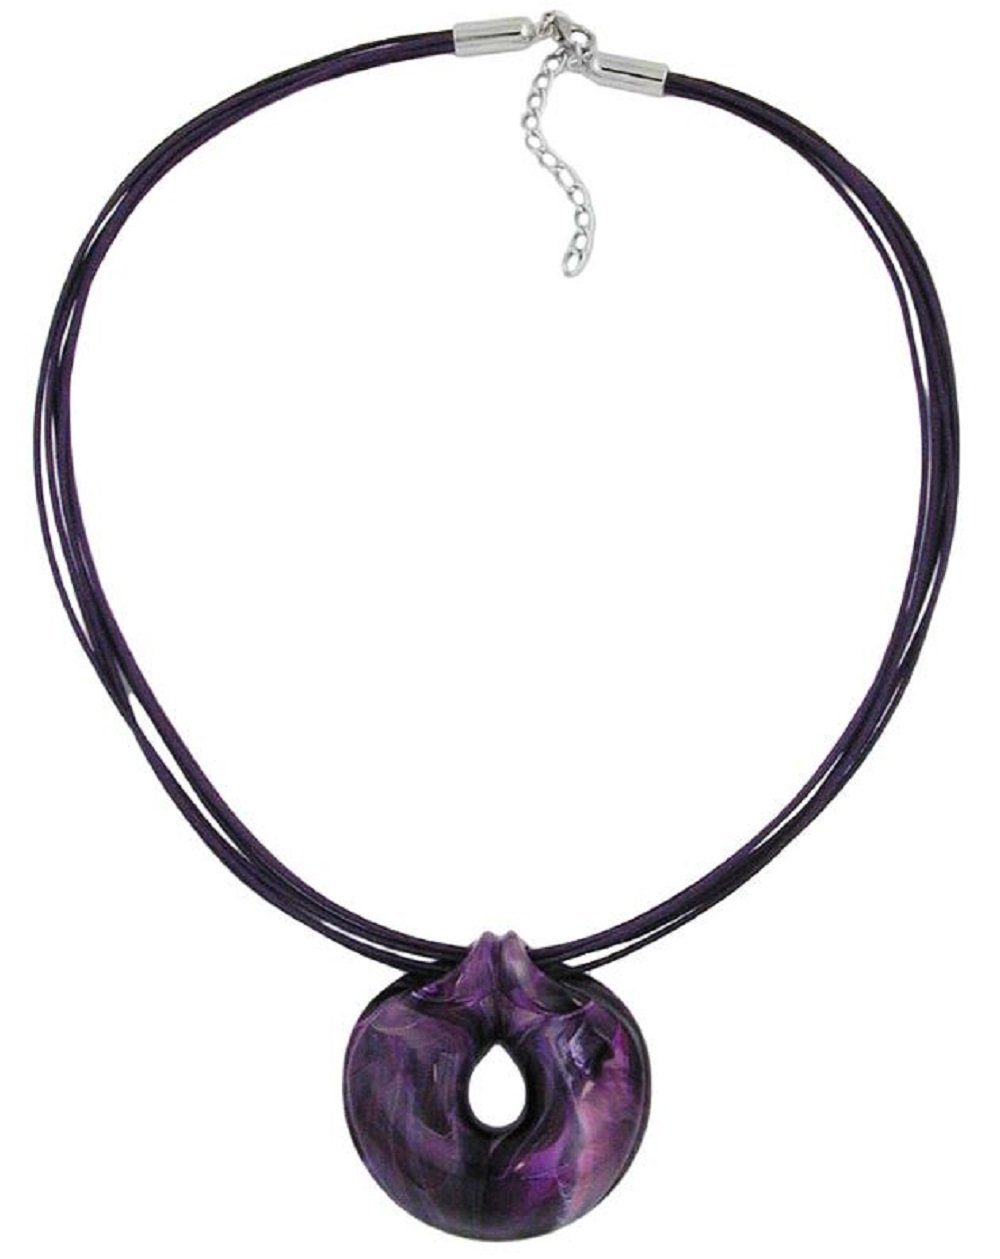 Top-Verkäufer unbespielt Collier Kette Kunststoff Anhänger Damen lila marmoriert Amulett 55 für Kordel cm, lila Modeschmuck